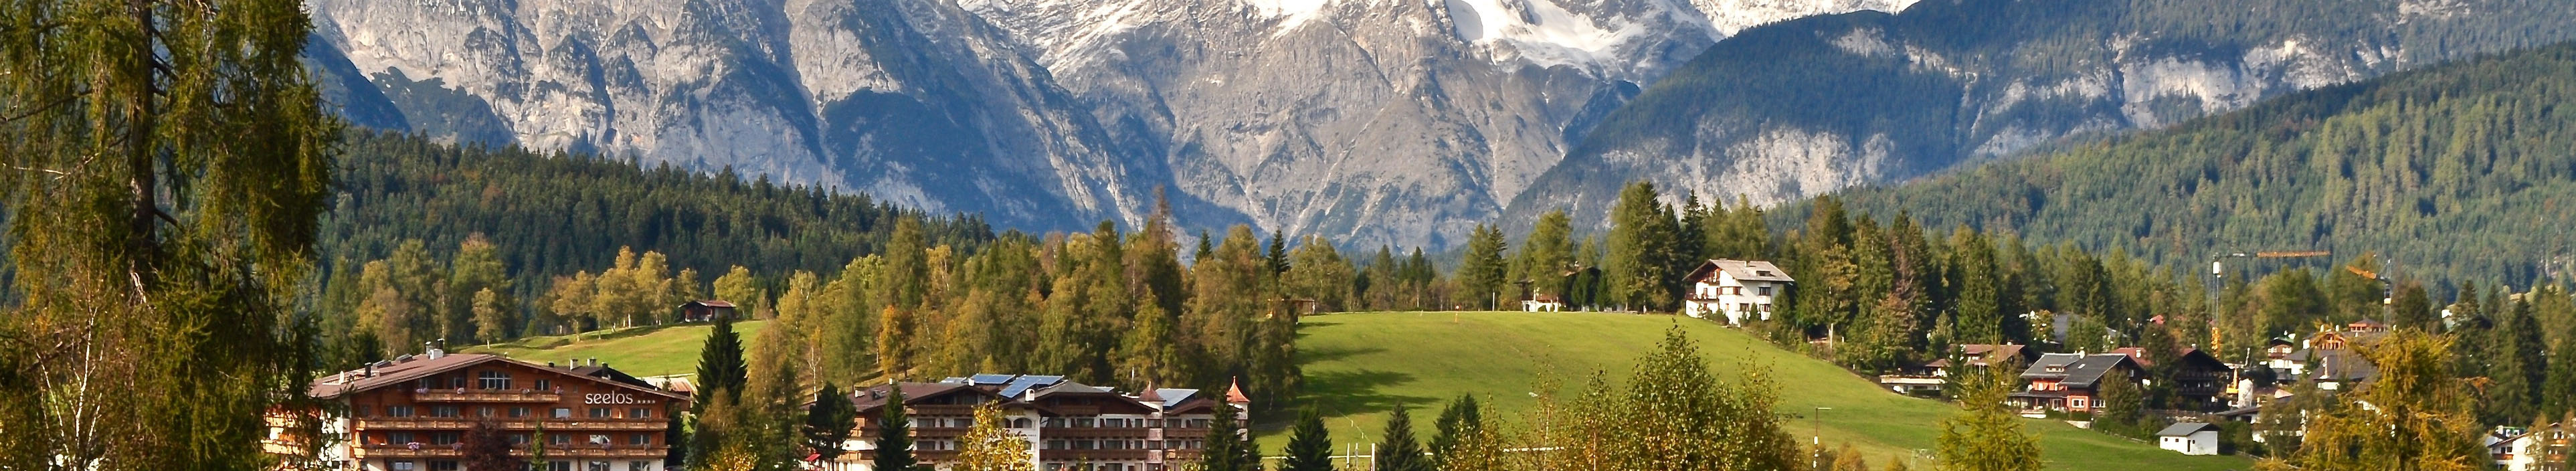 Bergpanorama mit Hotels in Tirol